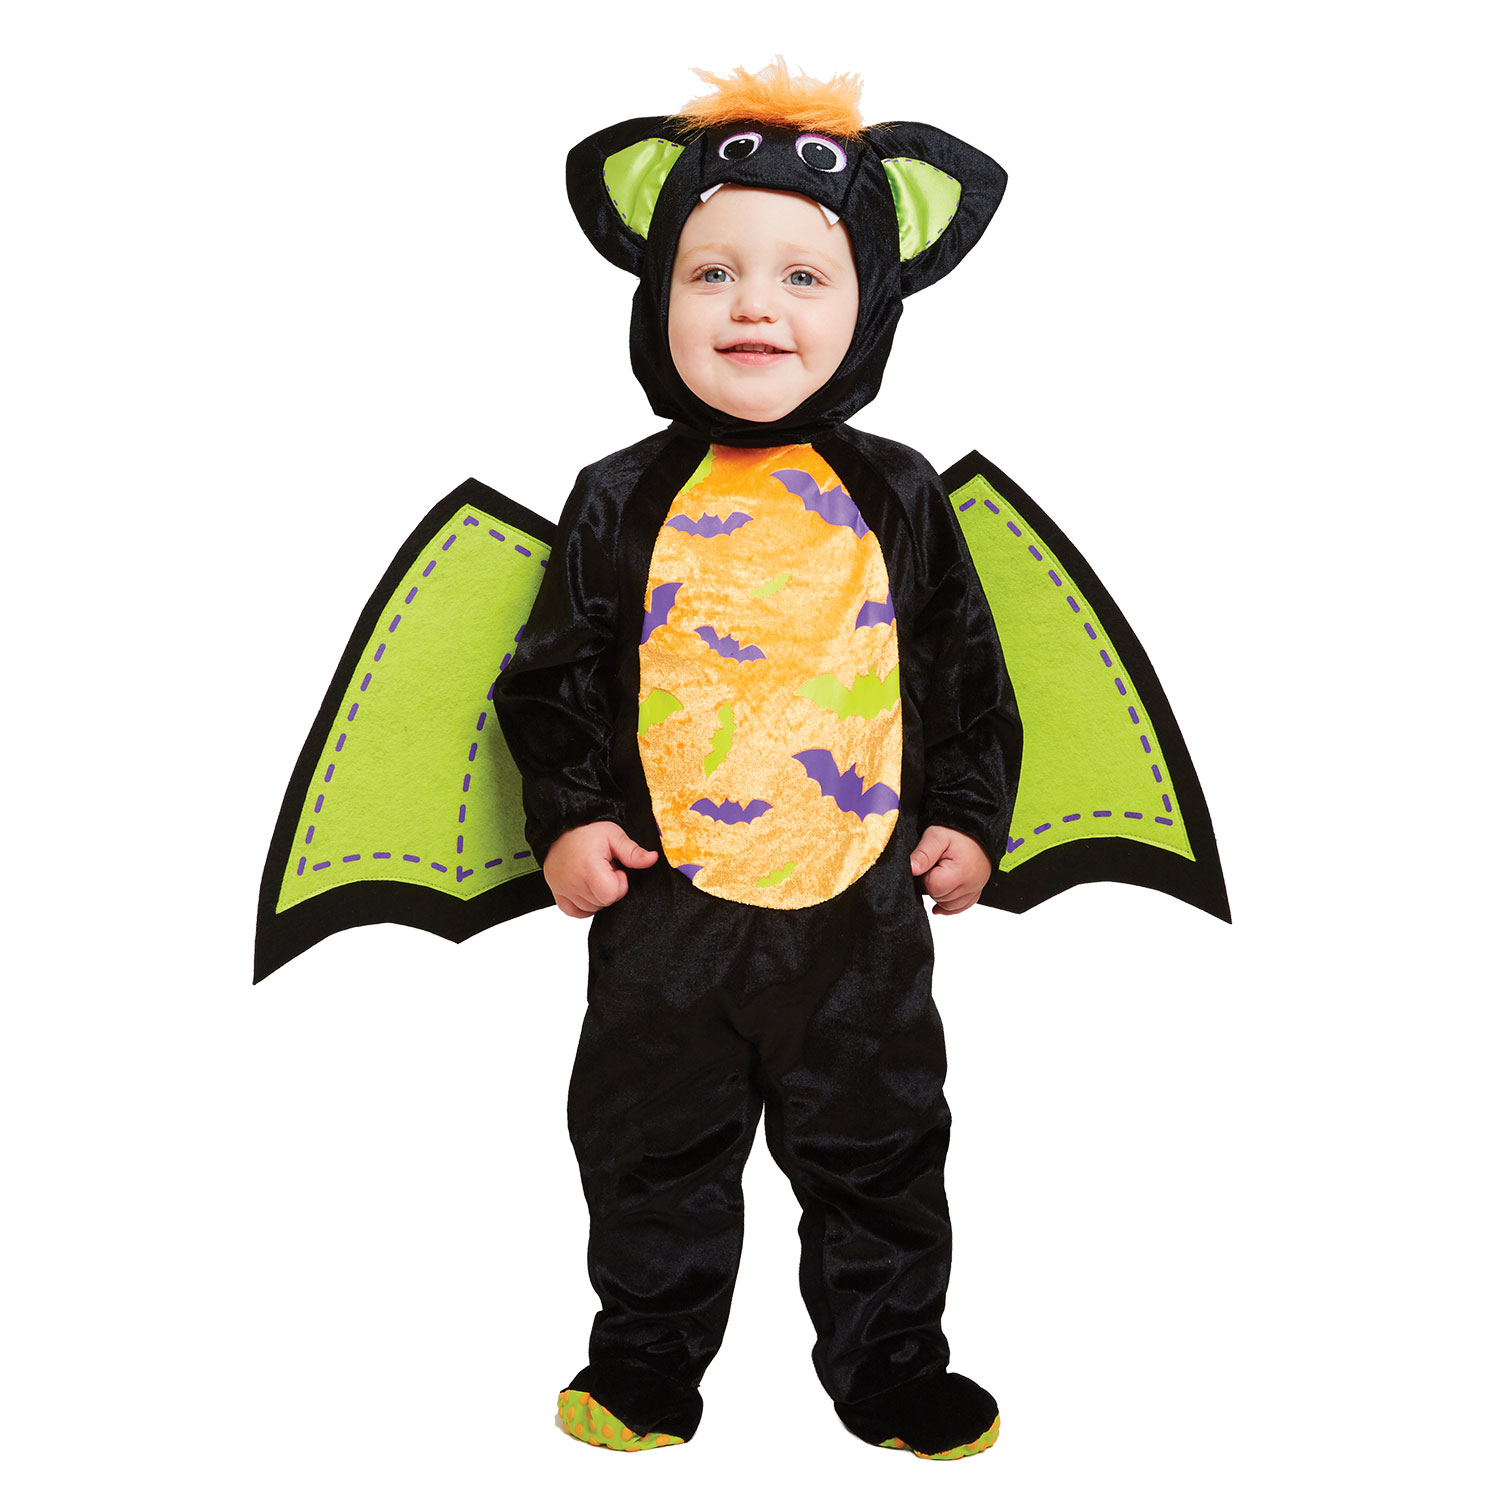 Iddy Biddy Bat Costume - Age 6-12 Months - 1 PC : Amscan International